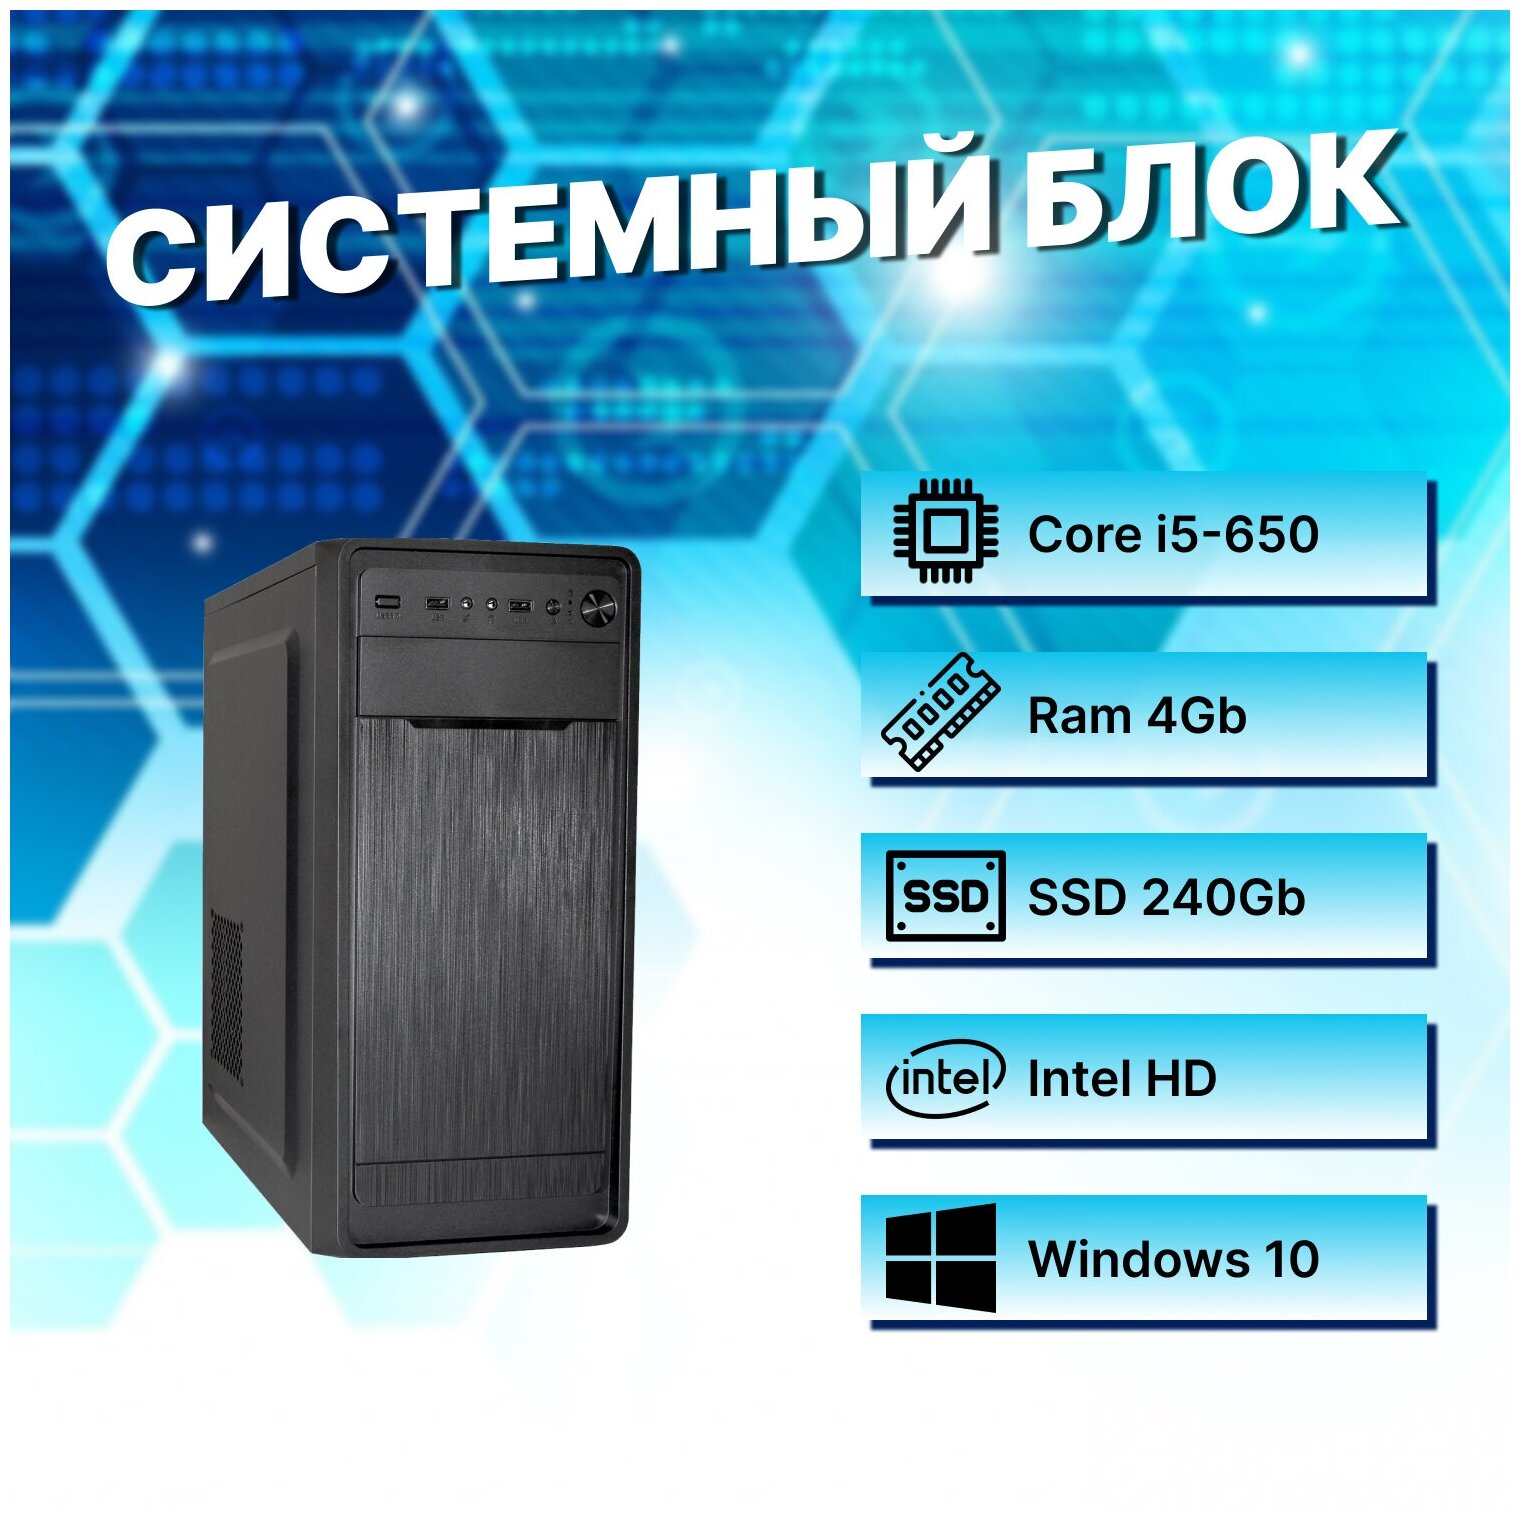 Системный блок Intel Core i5-650 (3.2ГГц)/ RAM 4Gb/ SSD 240Gb/ Intel HD/ Windows 10 Pro